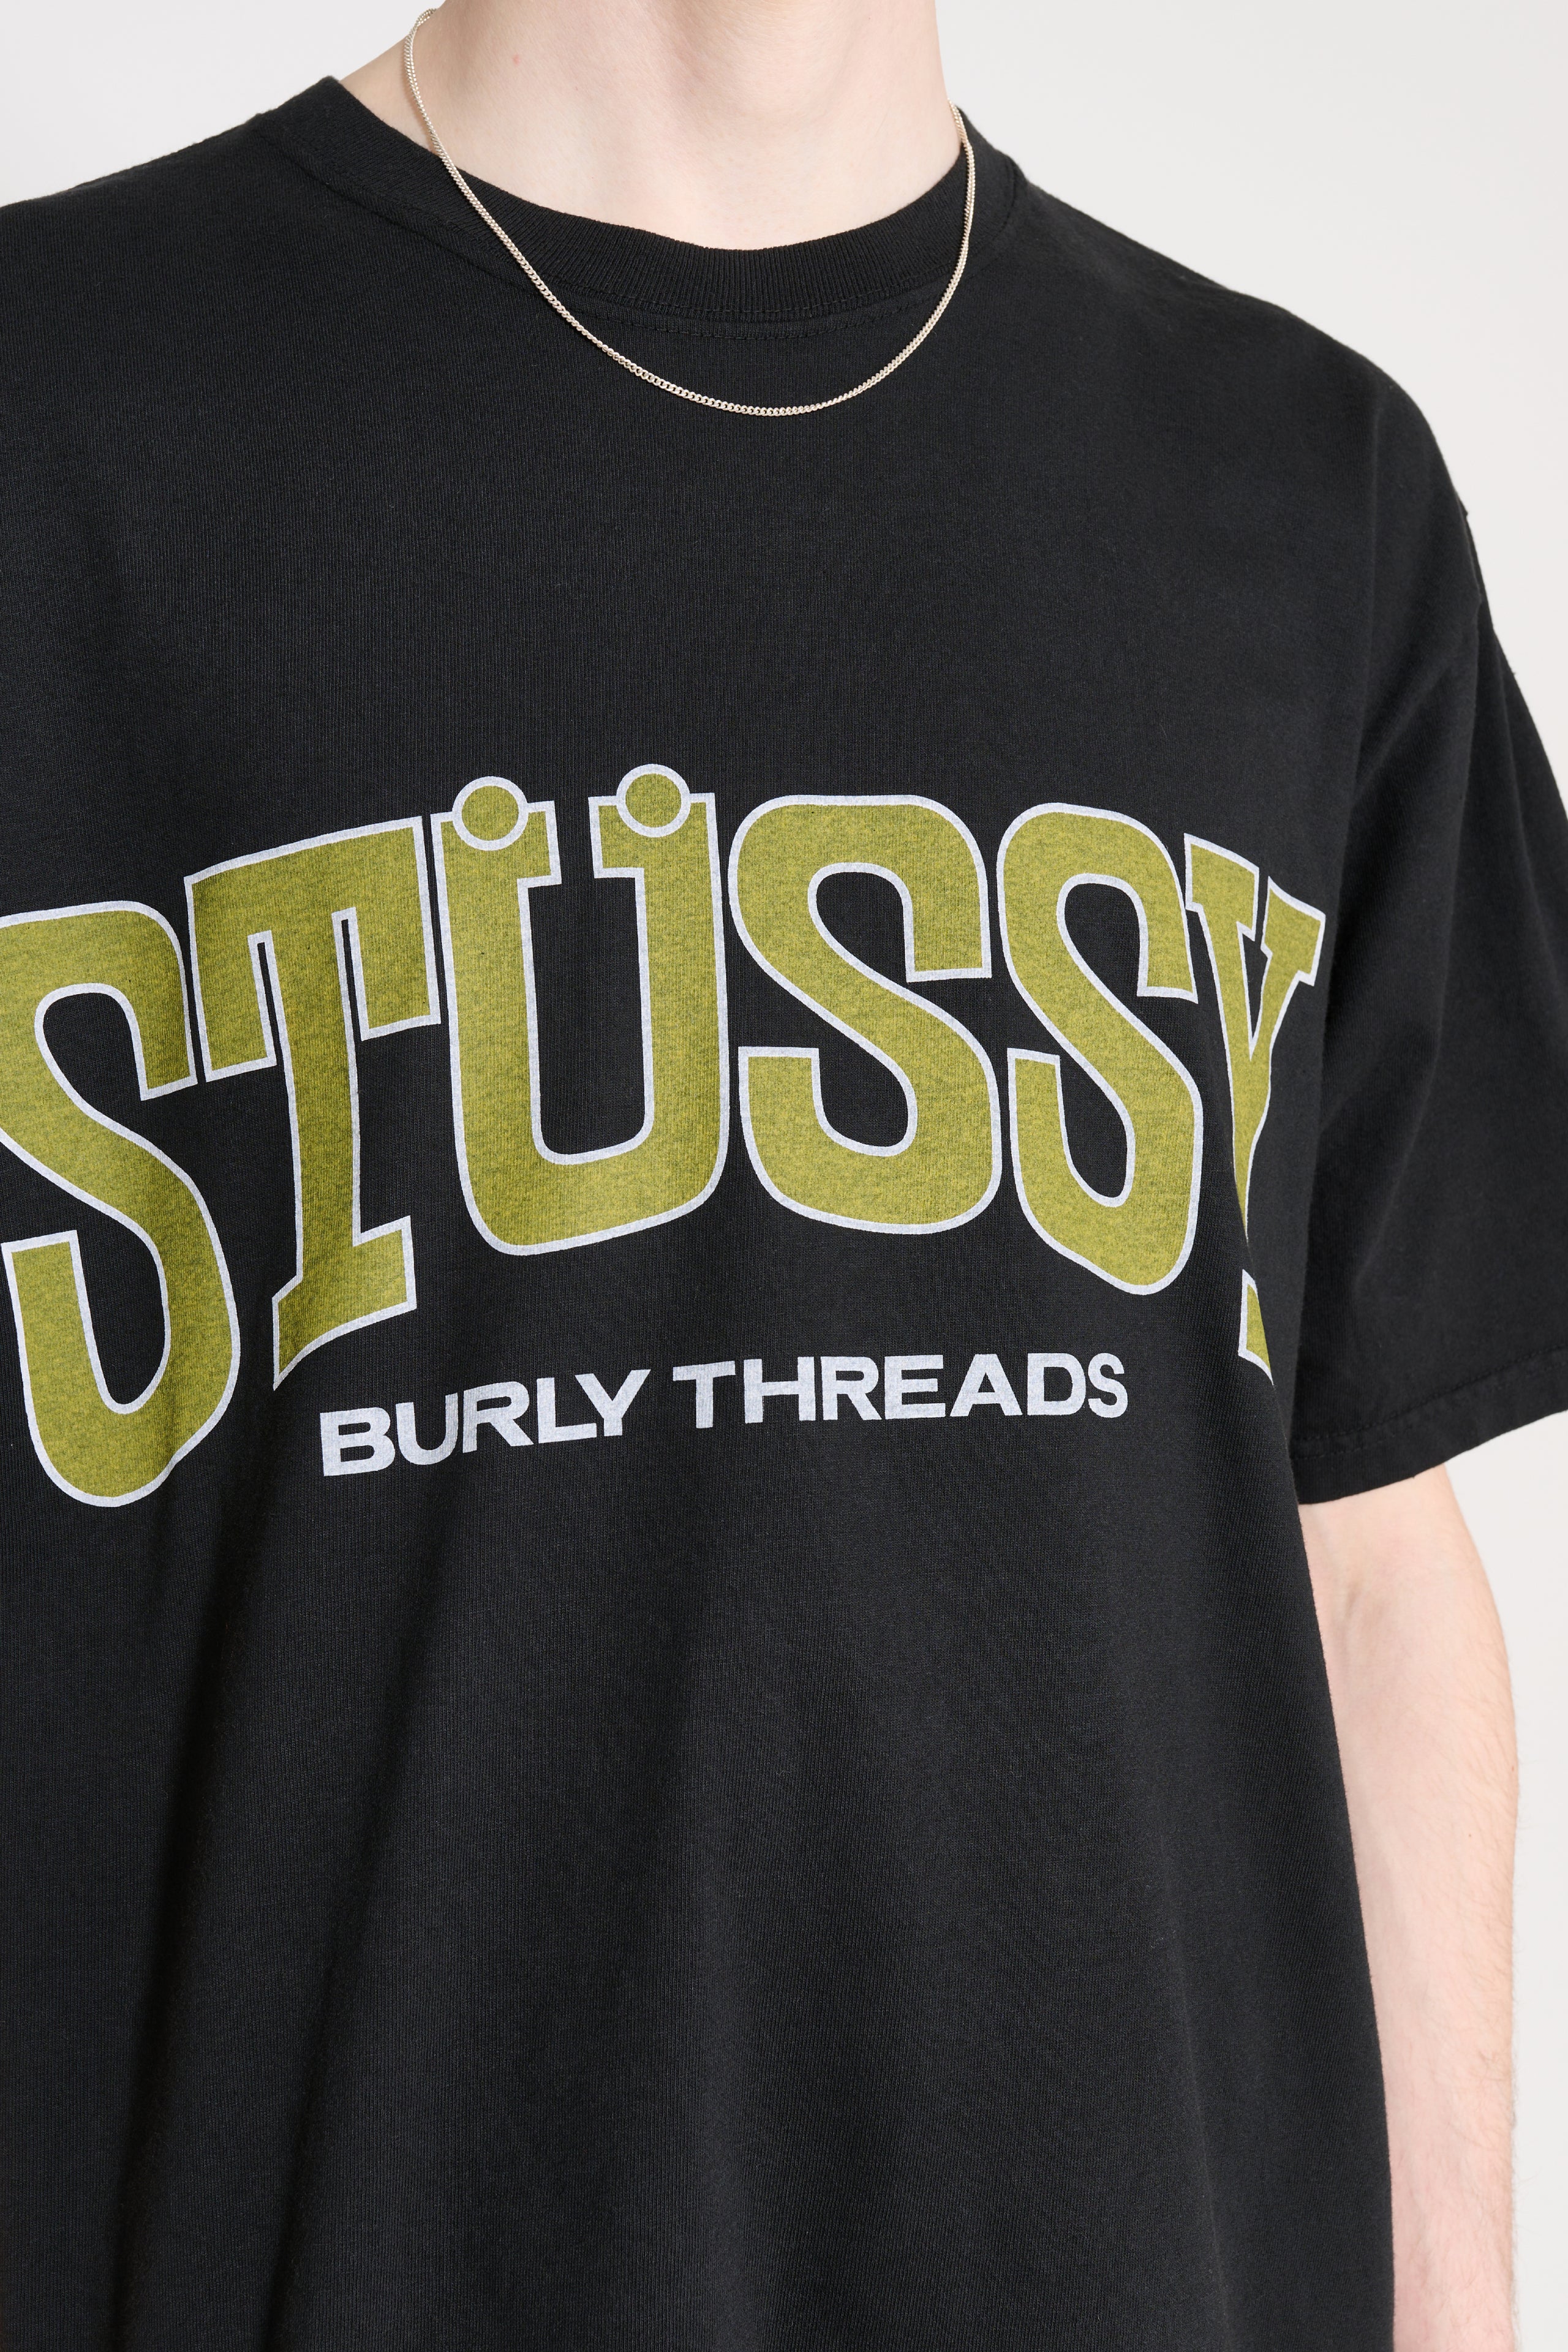 Stüssy Burly Threads Pigment Dyed Black